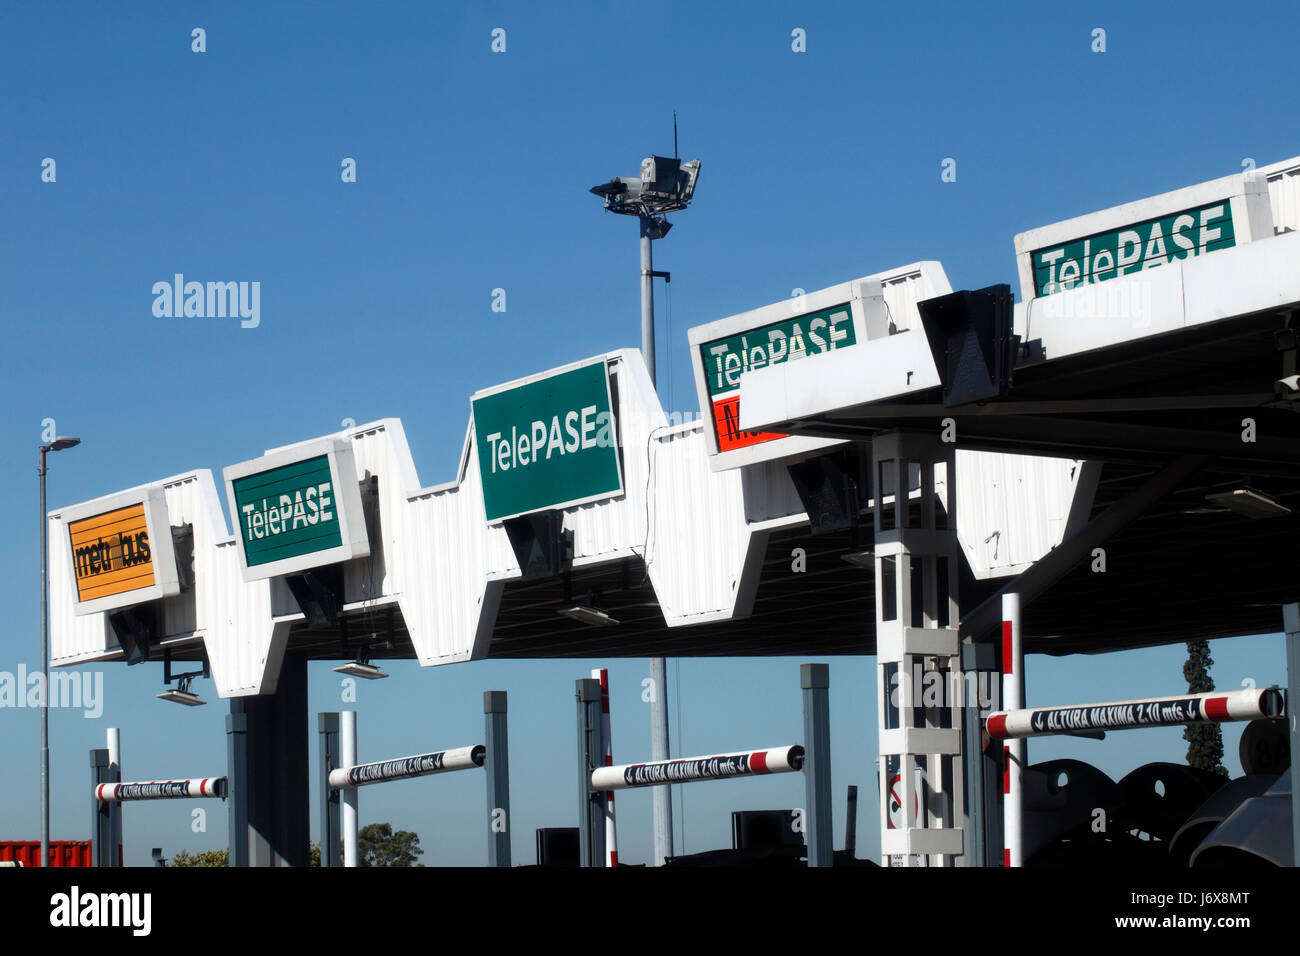 Telepase Metrobus tolls in Argentina. Highway highways Roads Motorways Spanish Argentinian Stock Photo